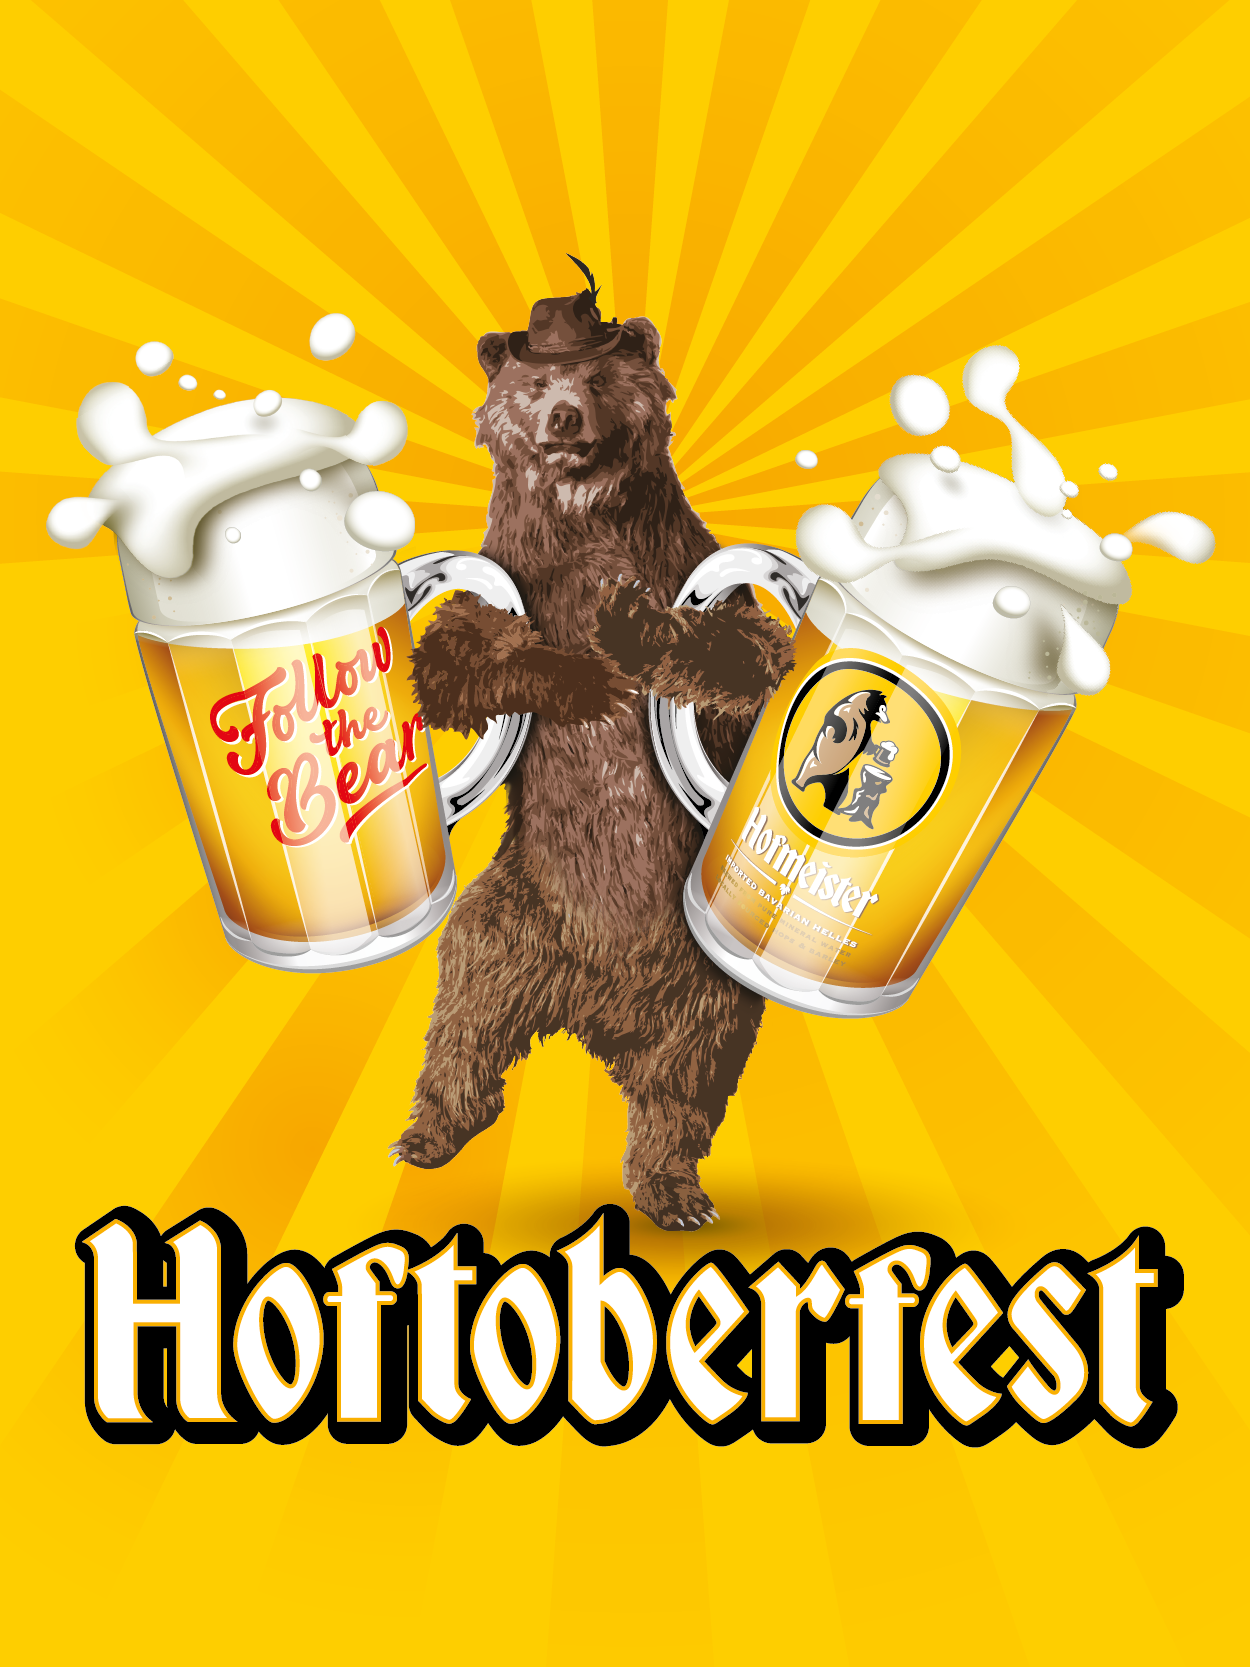 Hoftoberfest